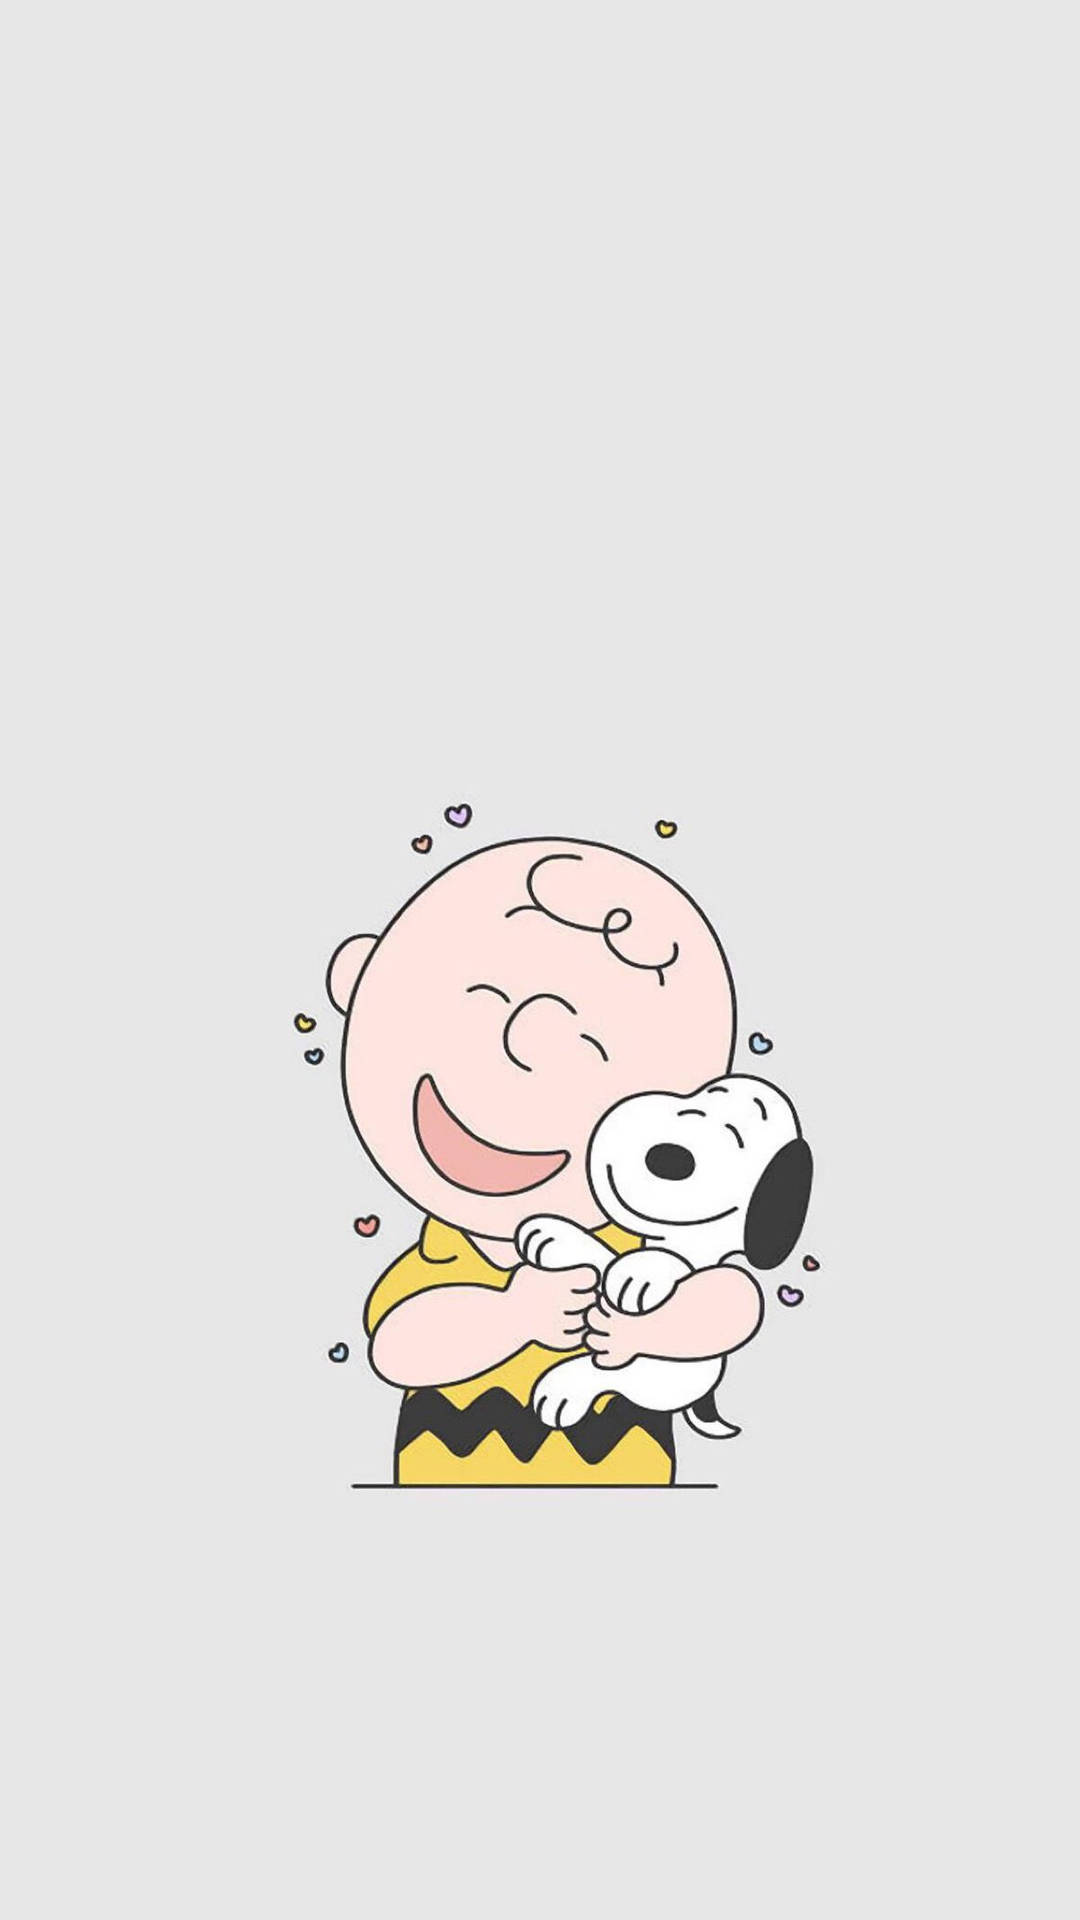 Charlie Brown And Snoopy Cuddling